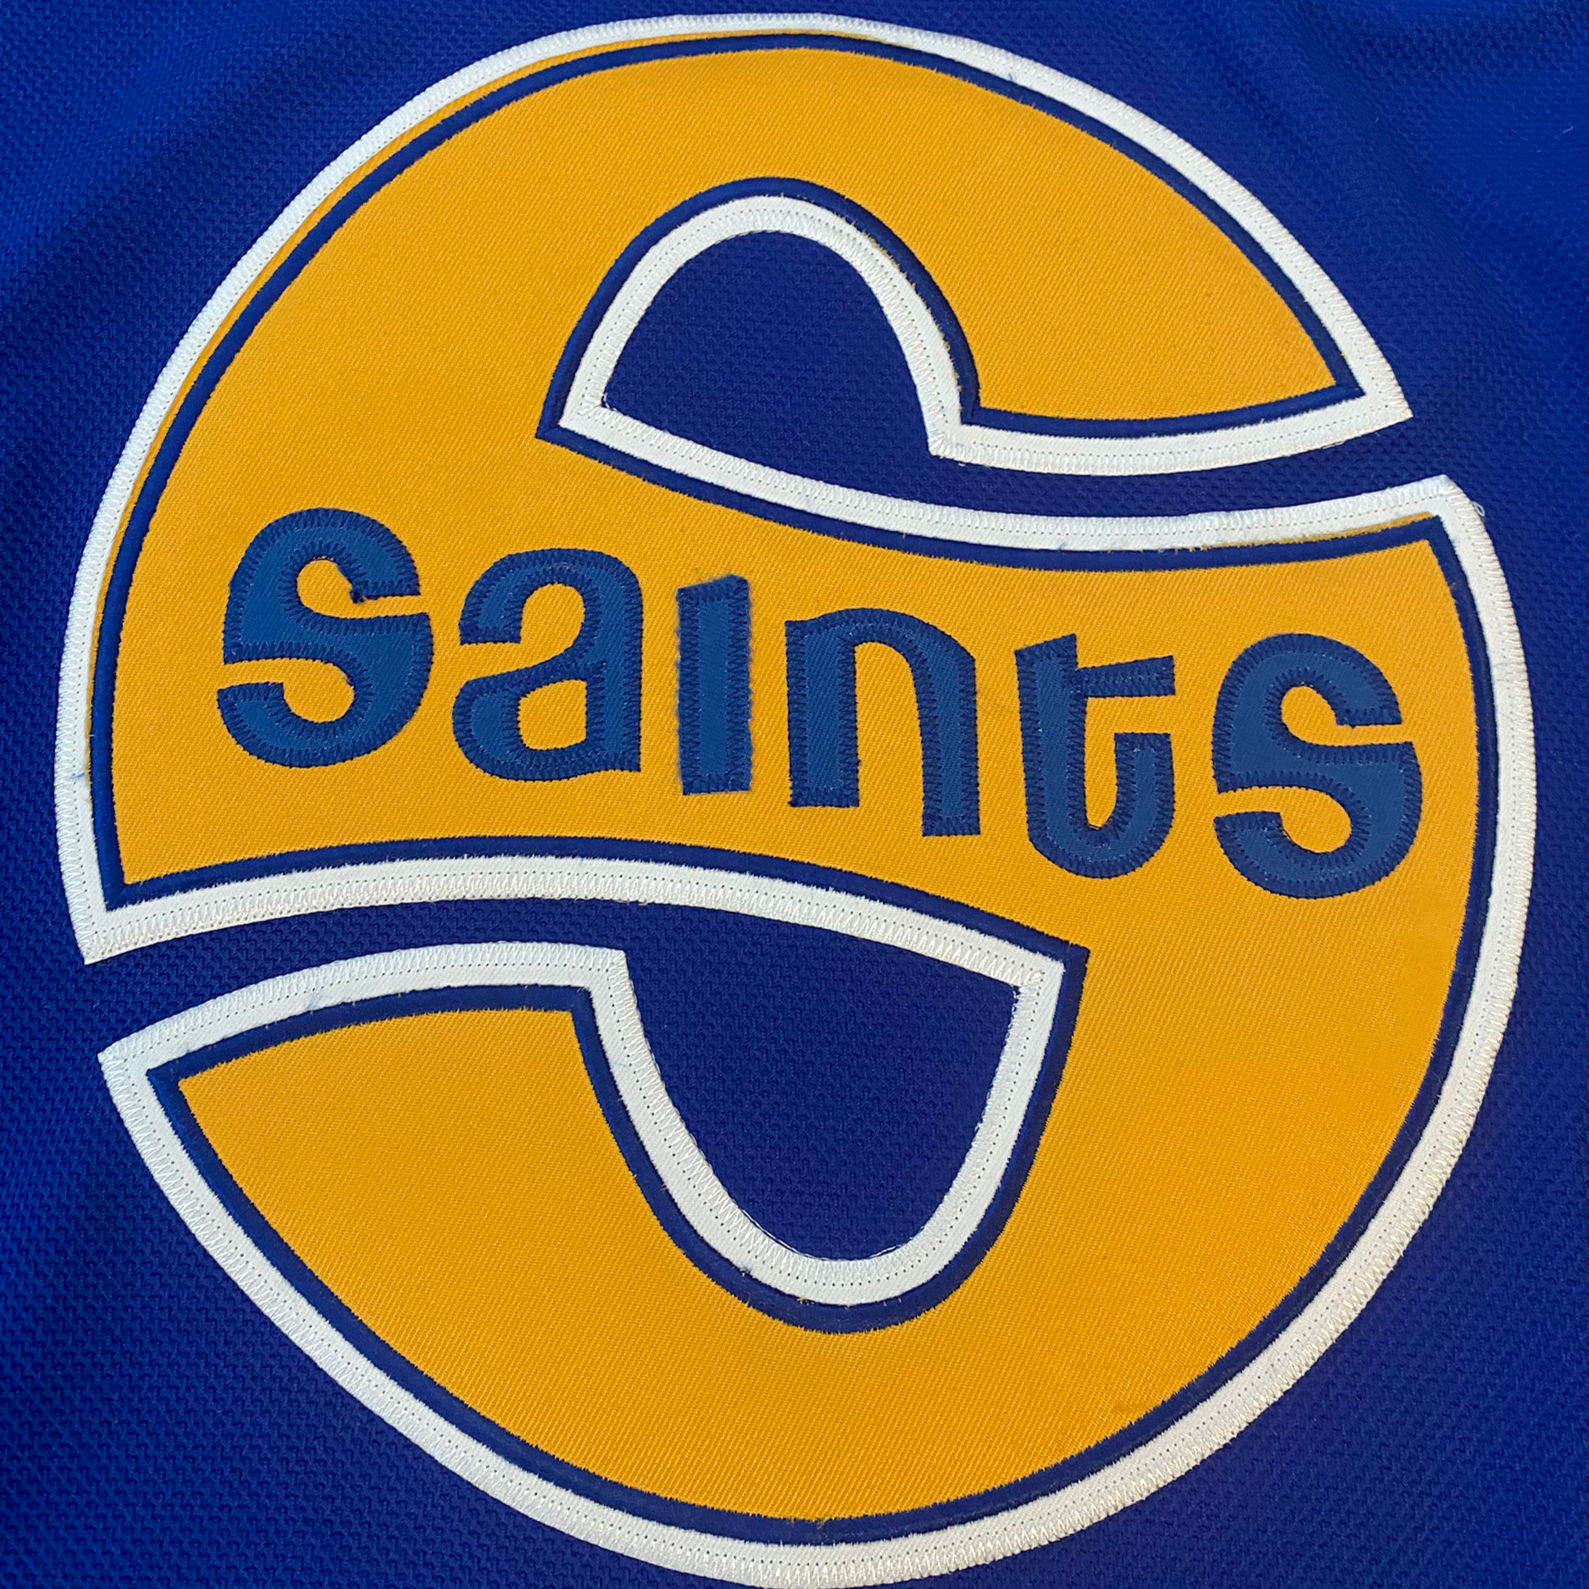 Minnesota Fighting Saints (1972-1977)